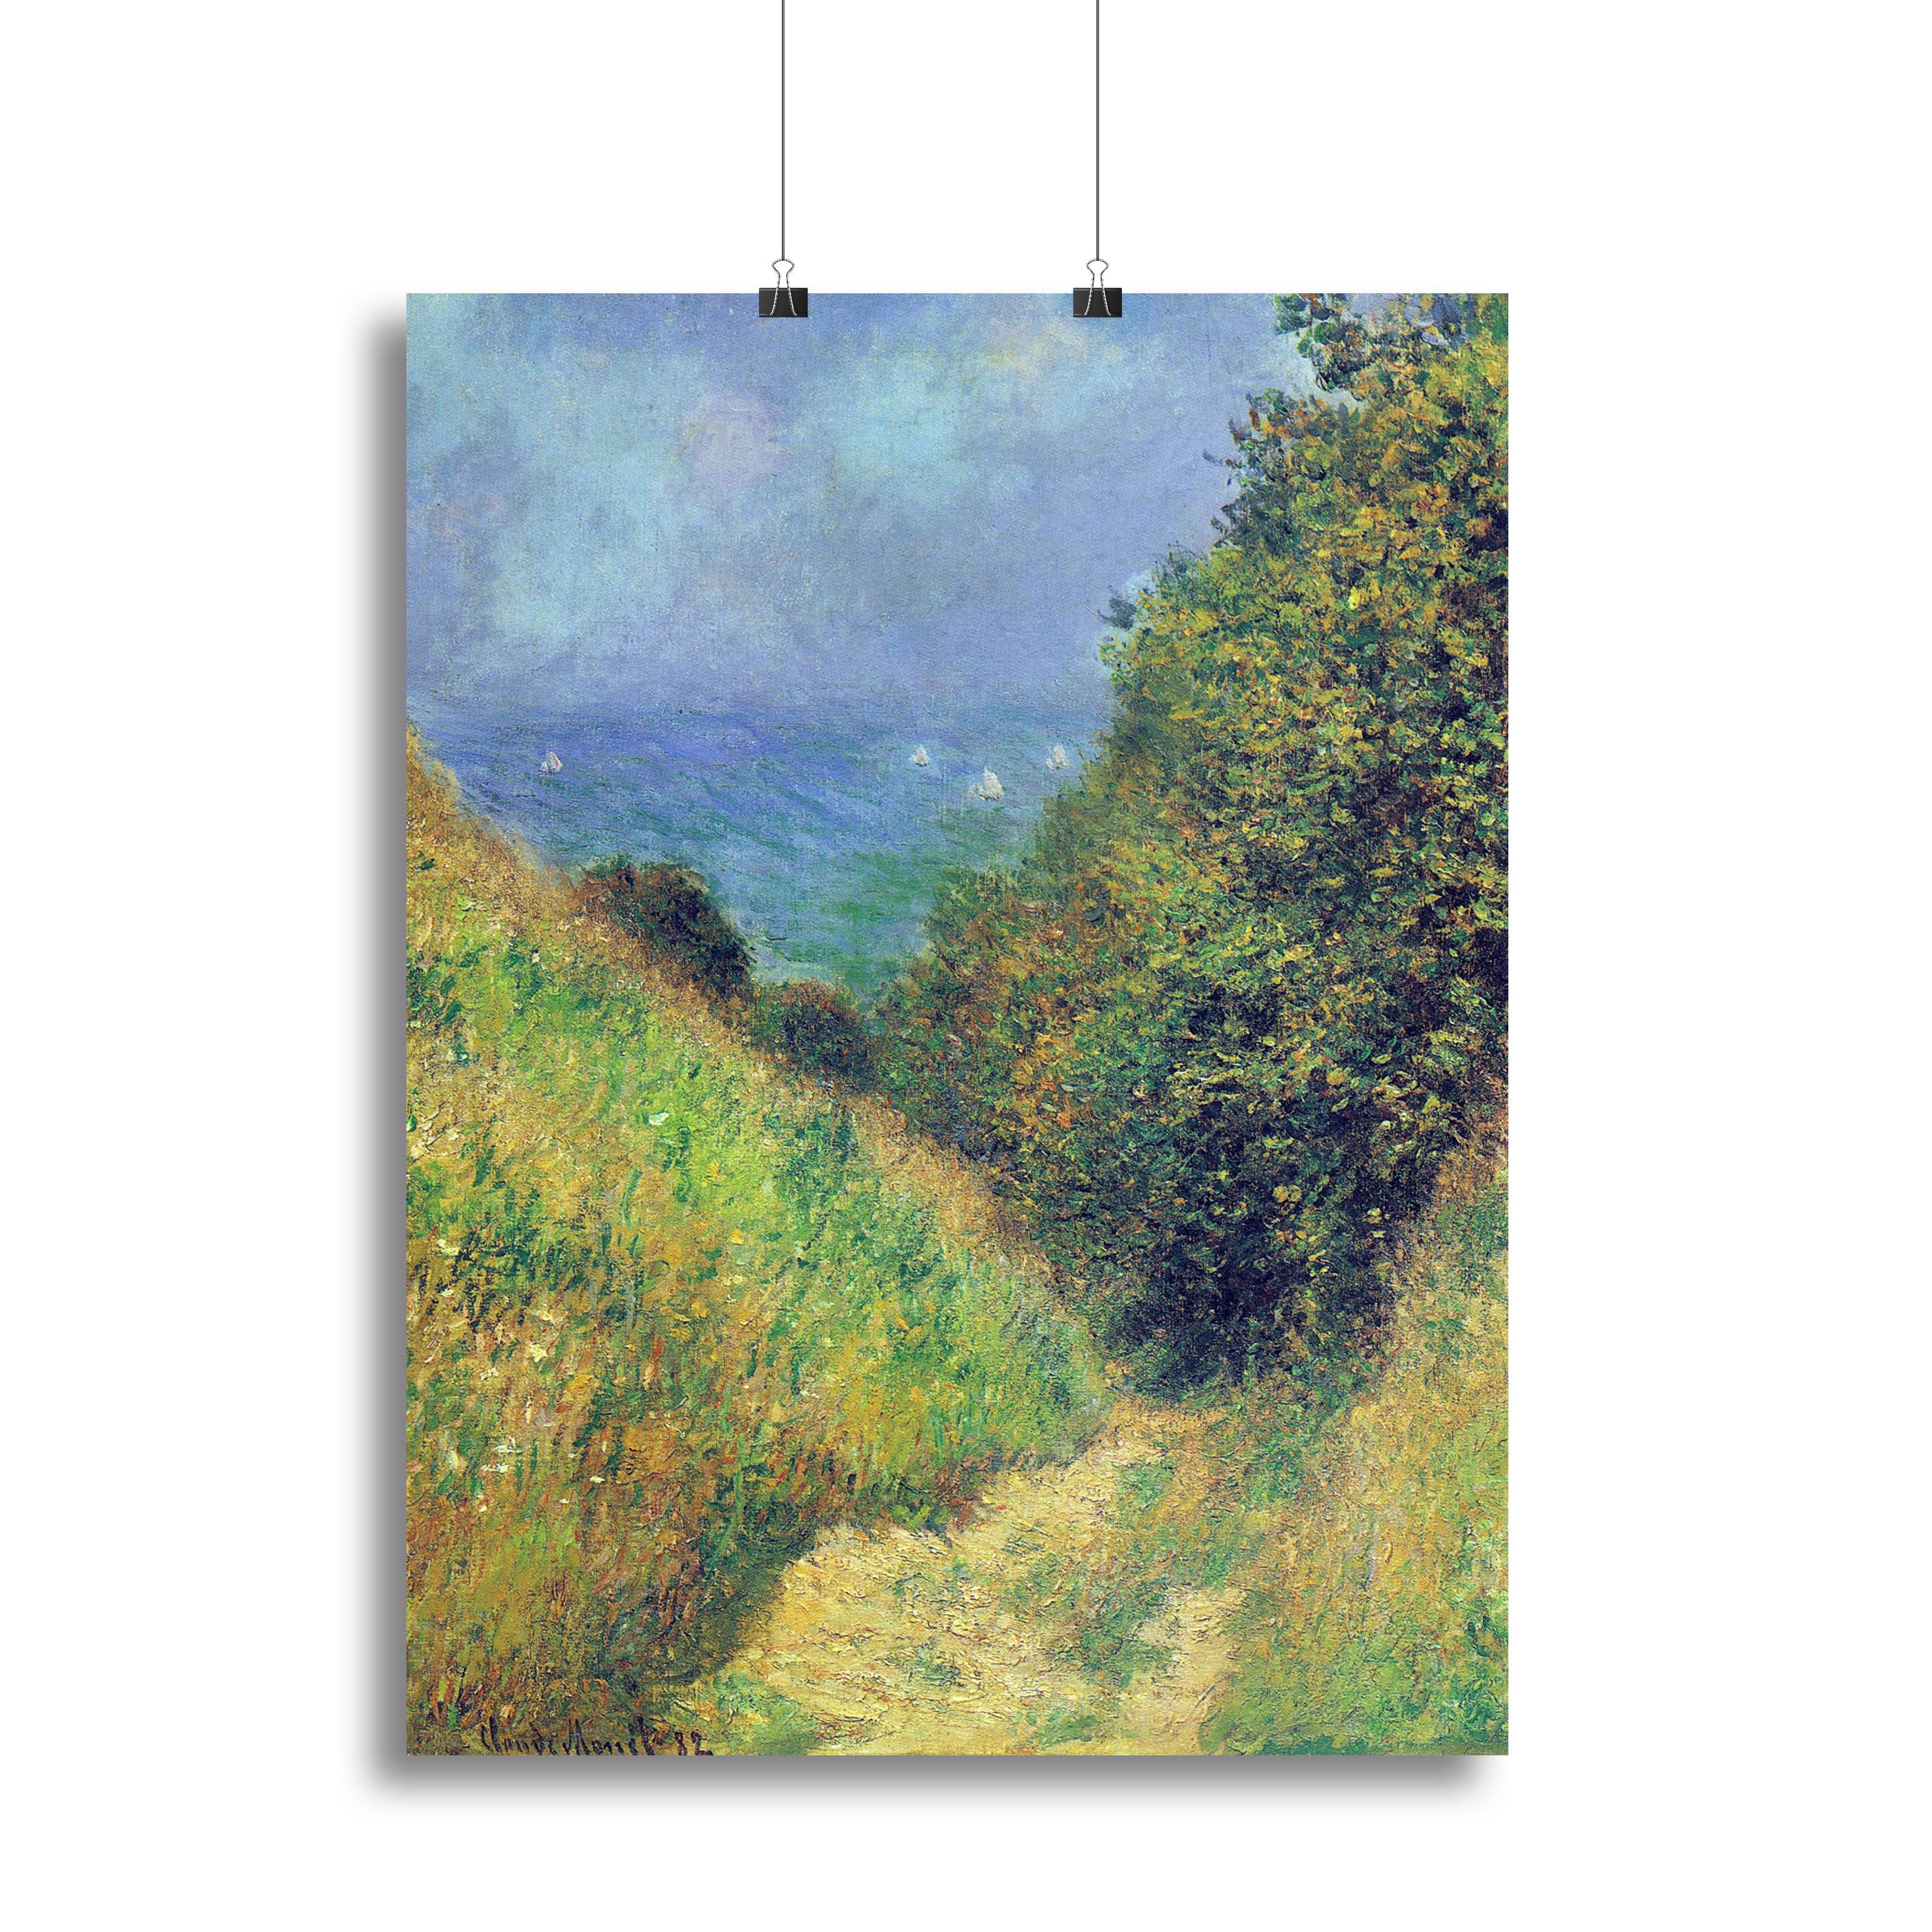 Pourville 2 by Monet Canvas Print or Poster - Canvas Art Rocks - 2